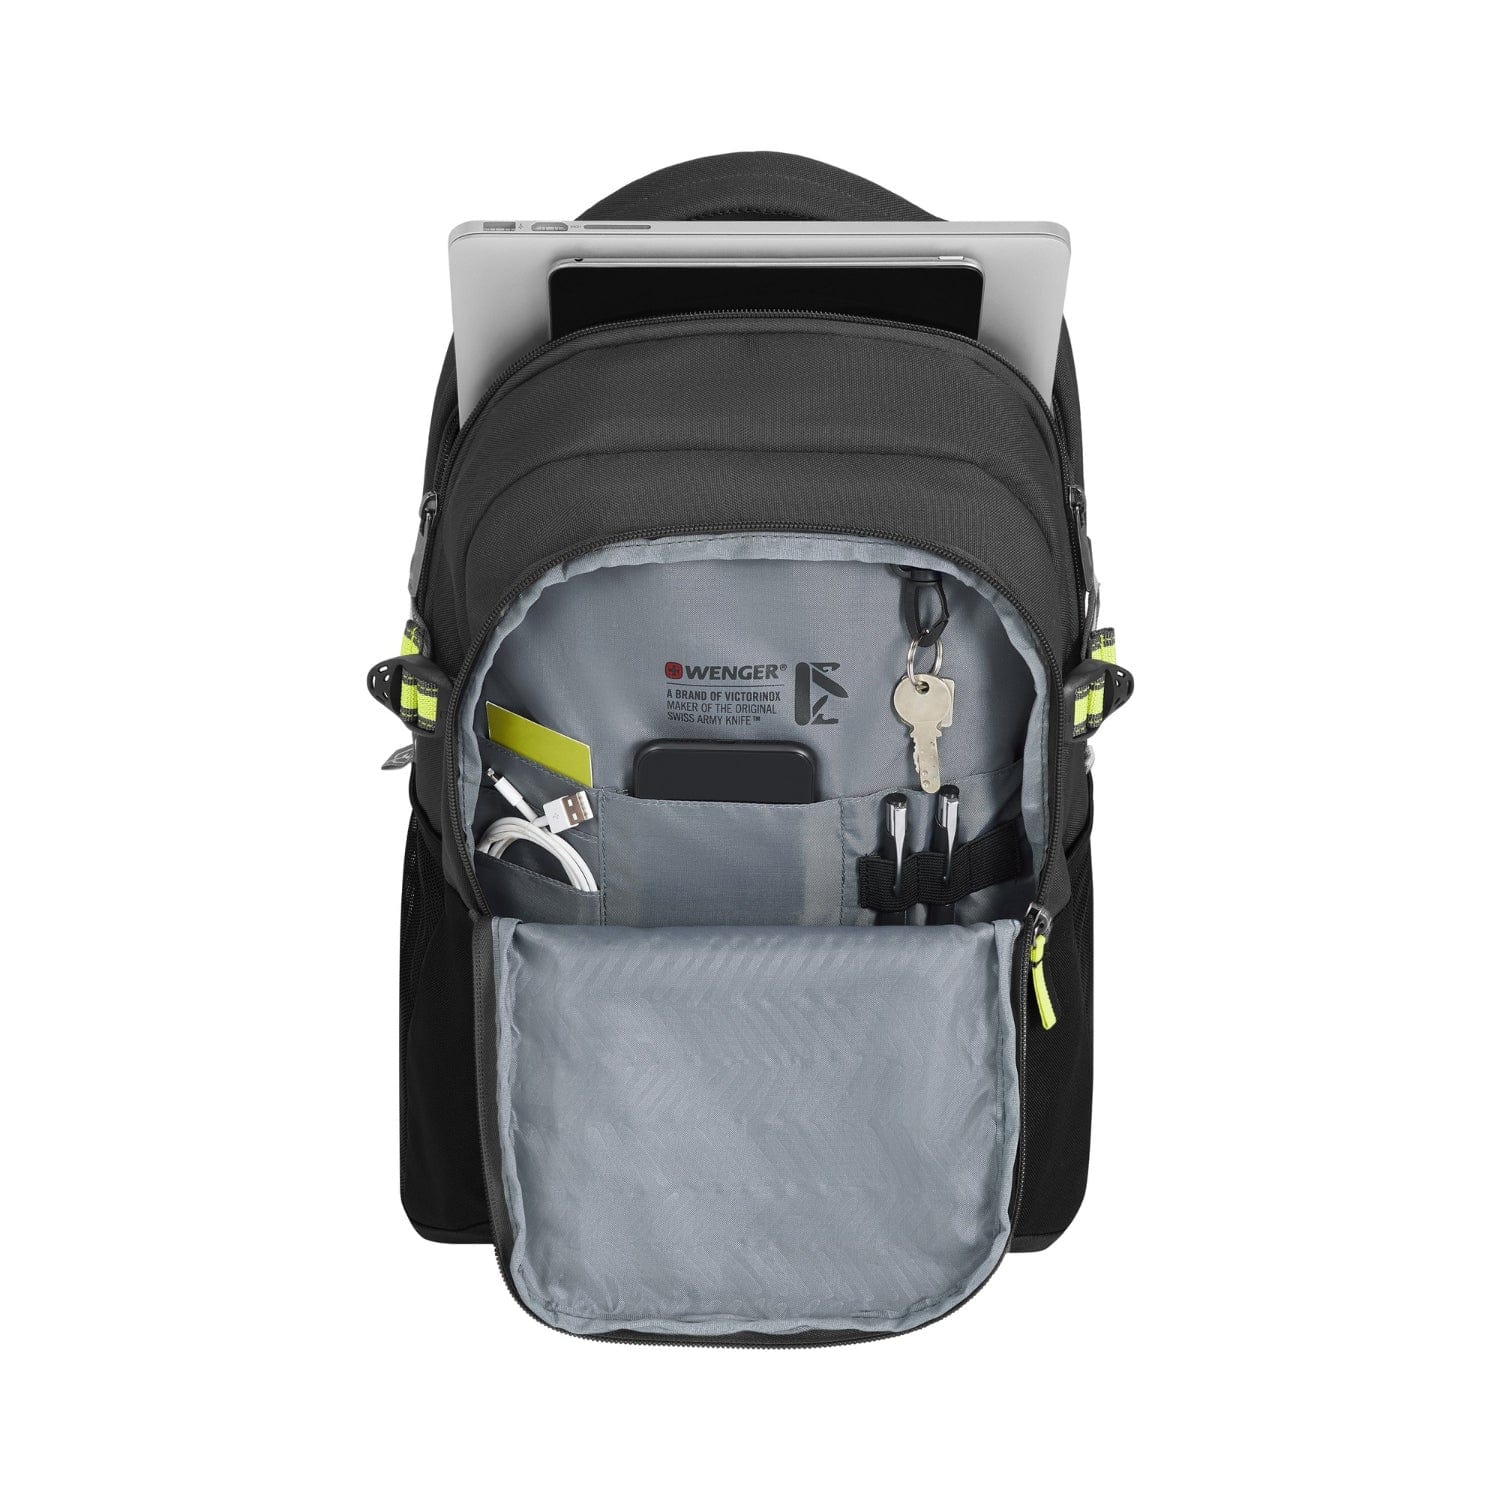 Wenger Ryde 16" Laptop Backpack with Tablet Pocket Anthracite - 611990